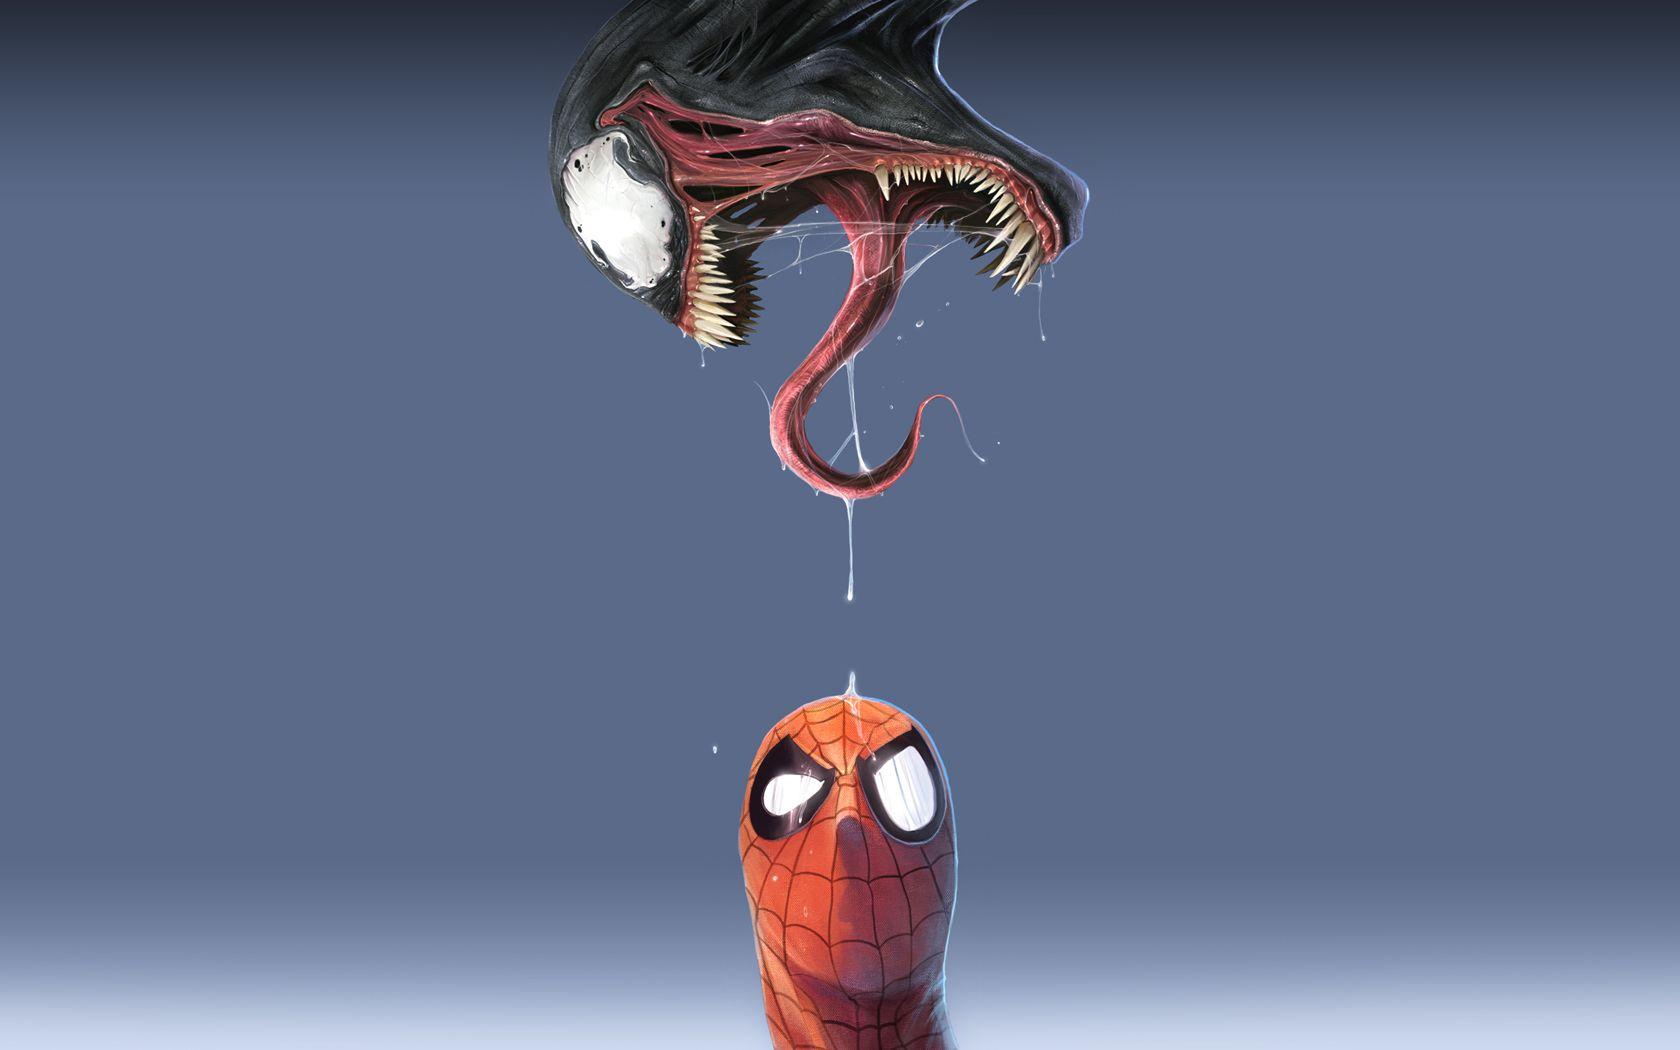 Spider man Turning Into The Venom 4K wallpaper download